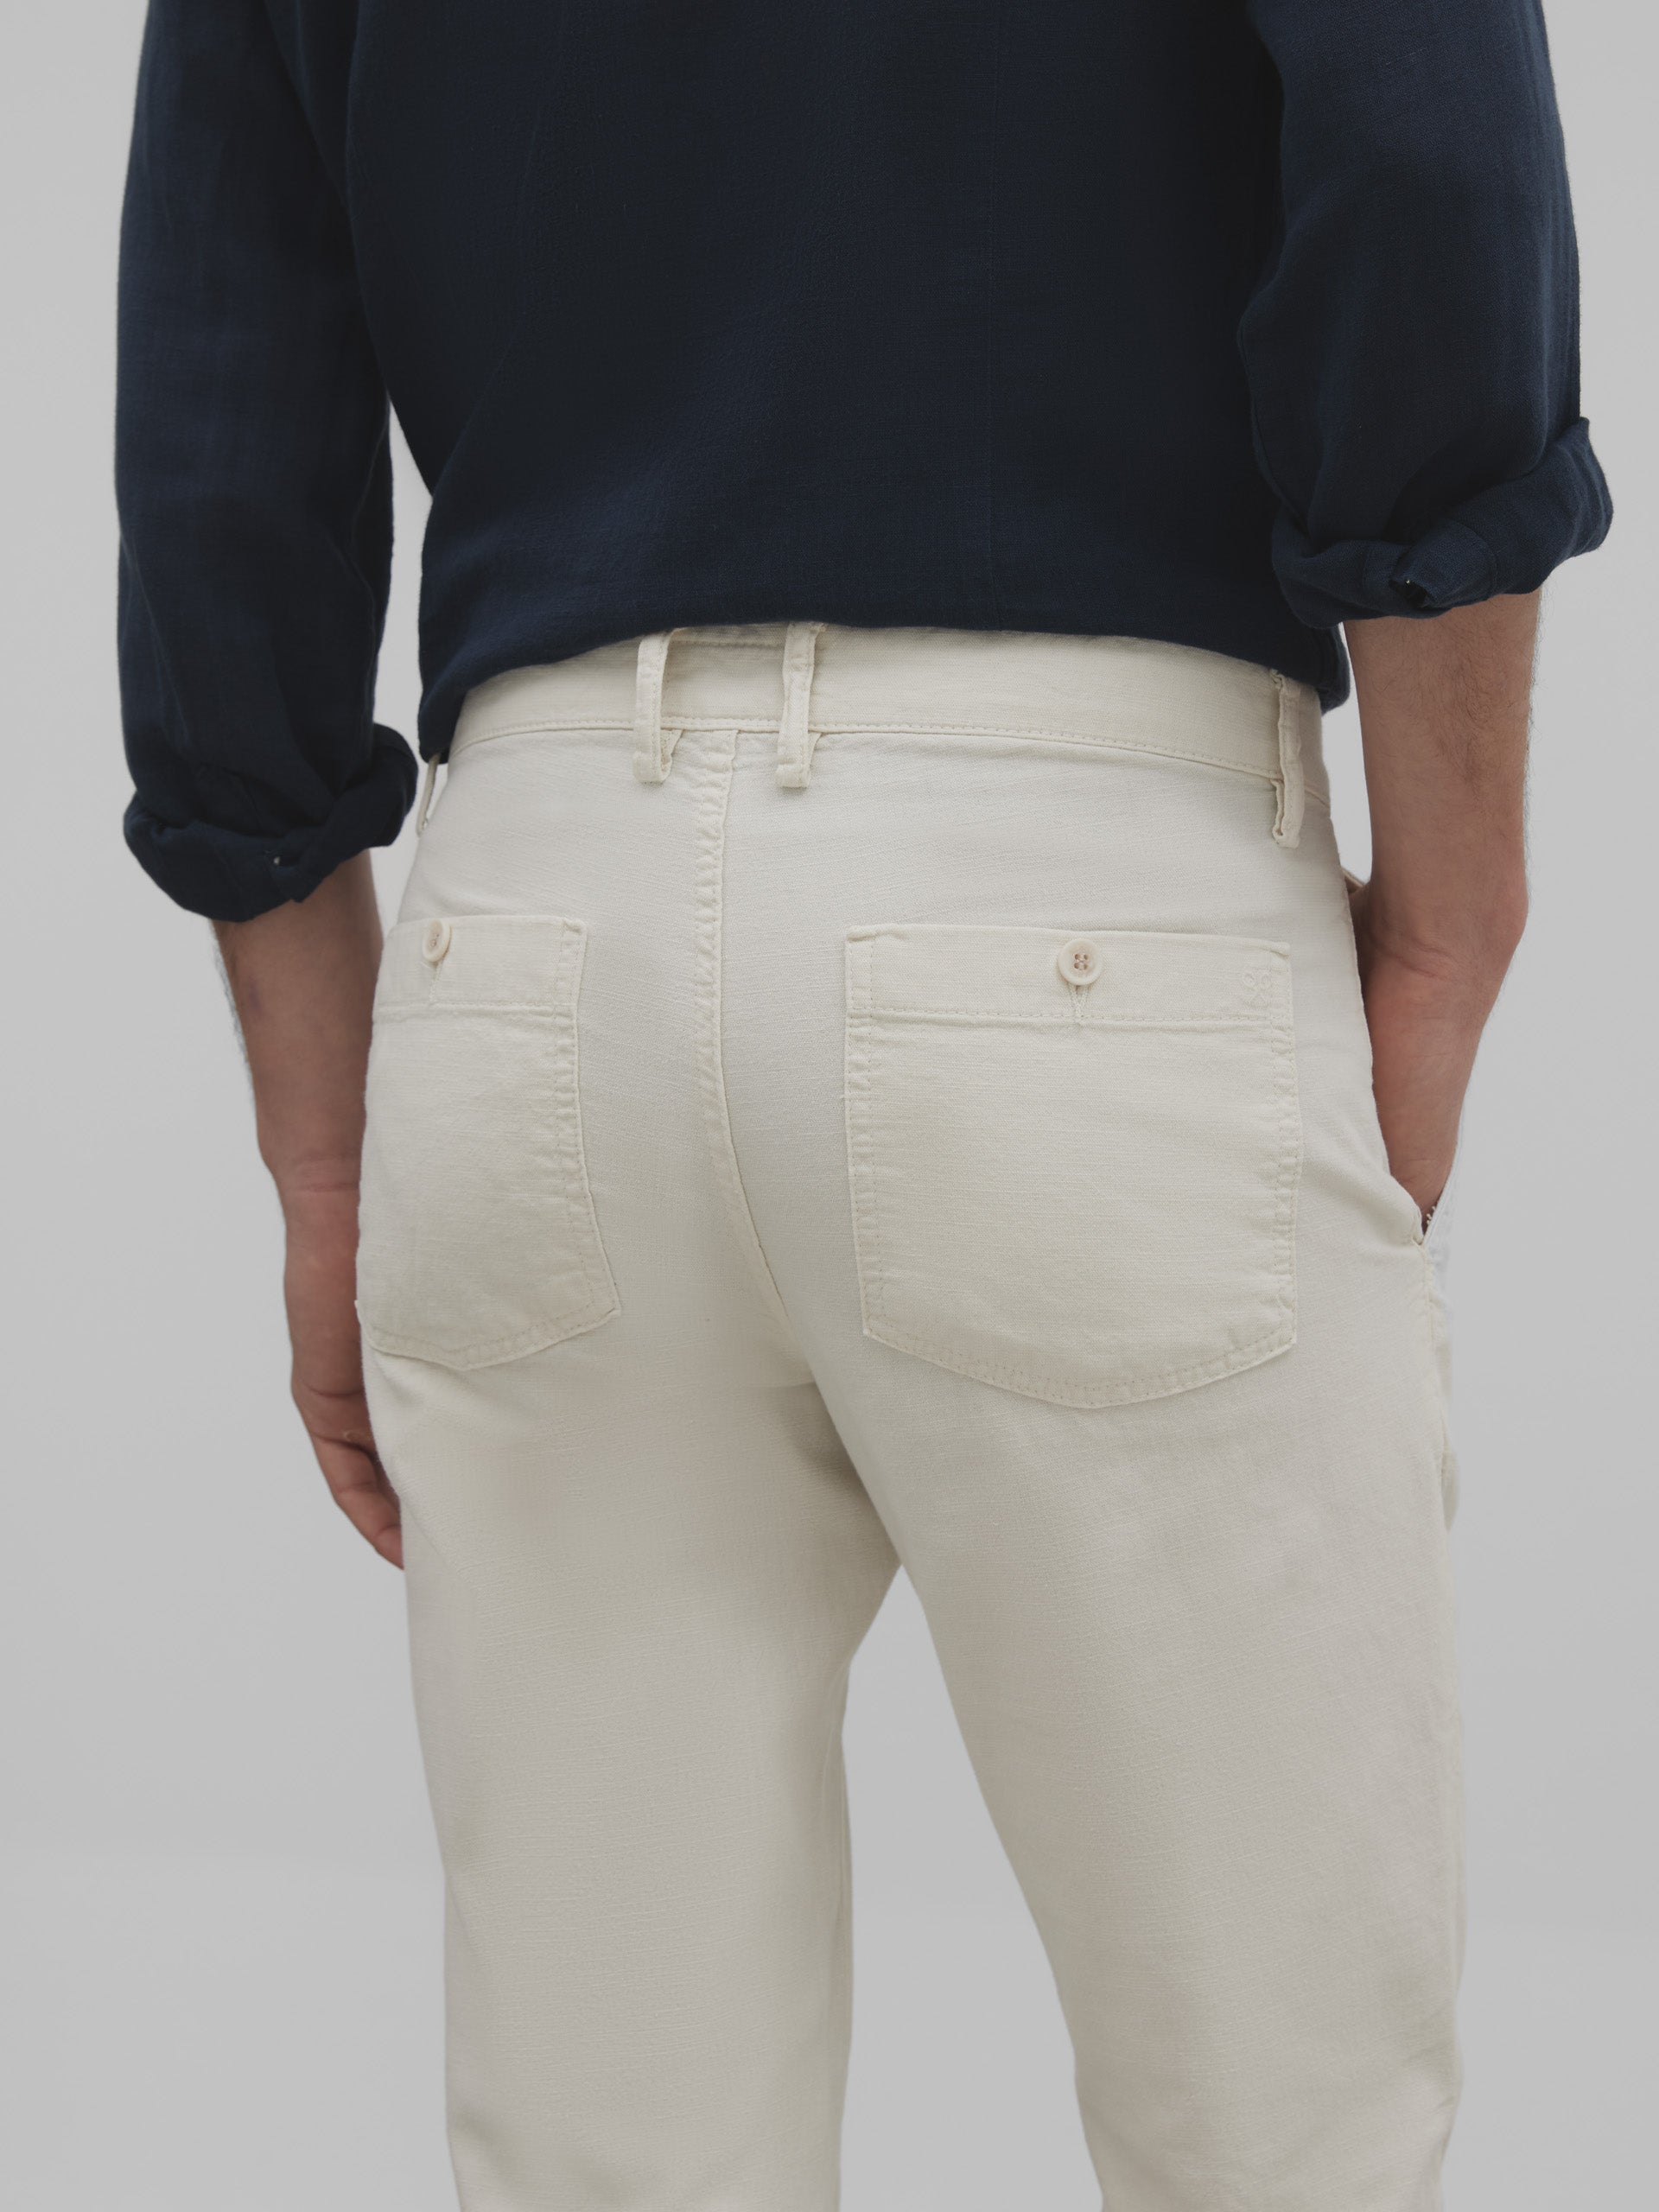 Light beige linen chino sport pants